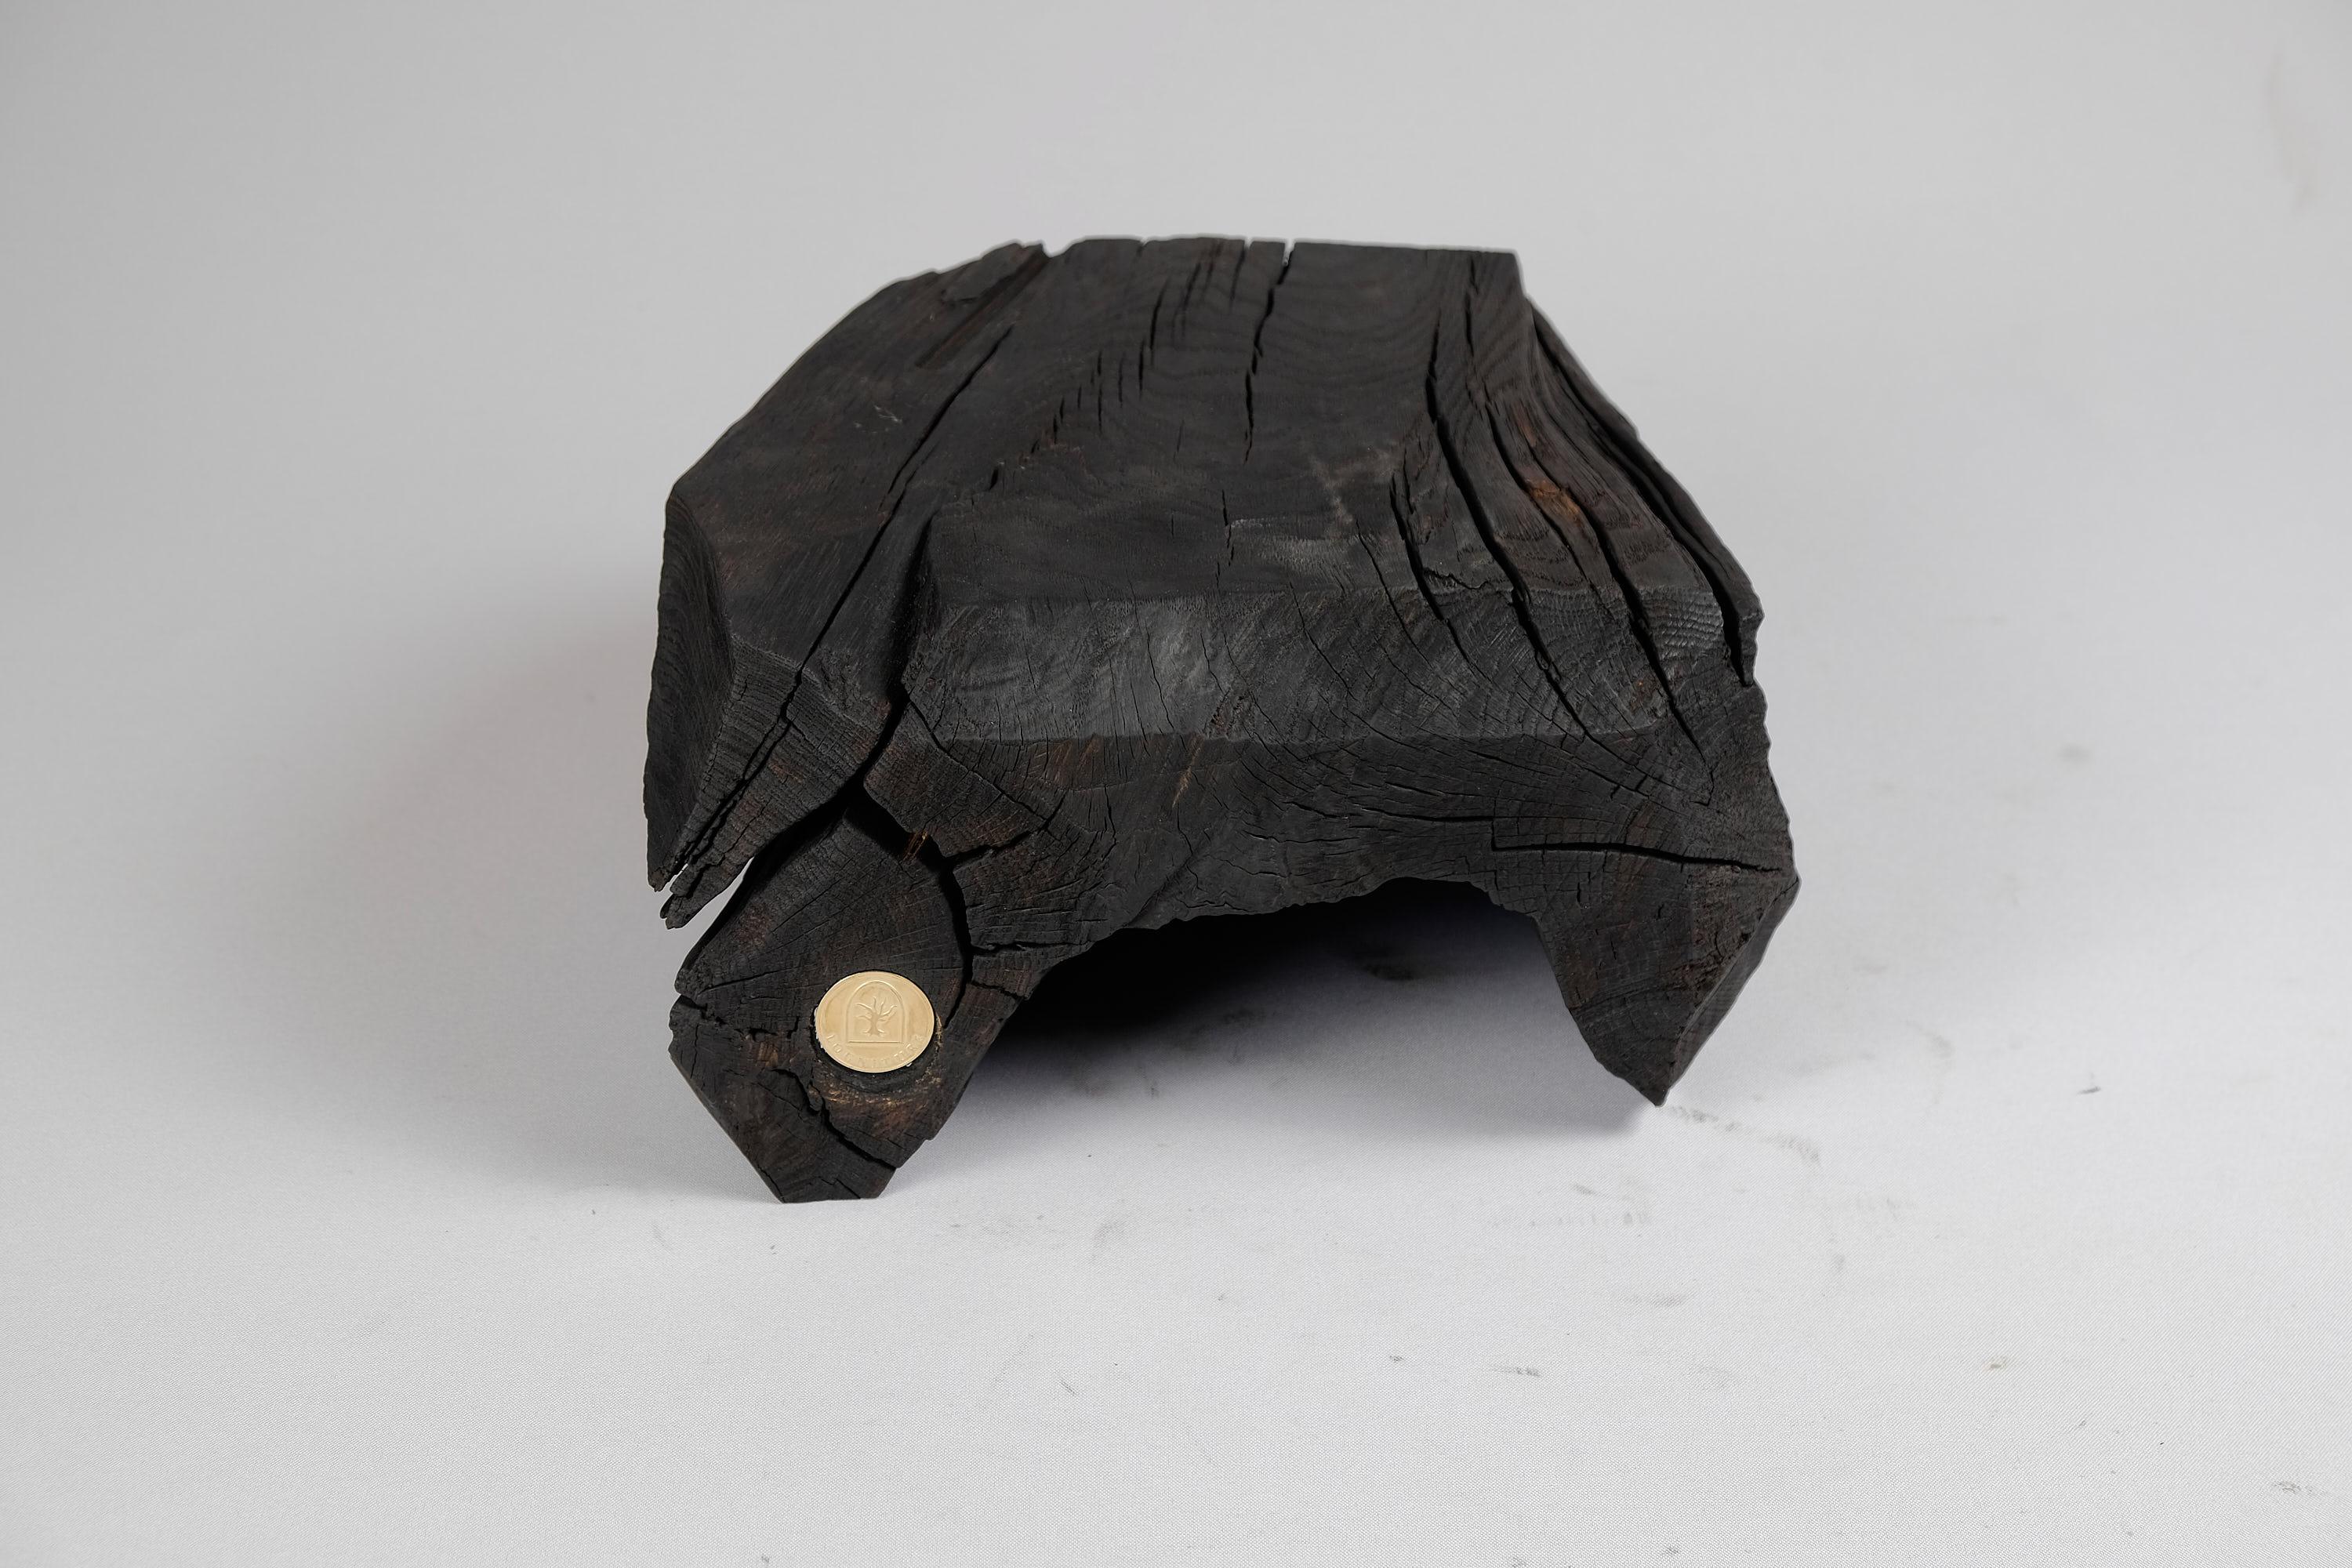 Brutalist Solid Burnt Wood, Side Table, Stool, Original Contemporary Design For Sale